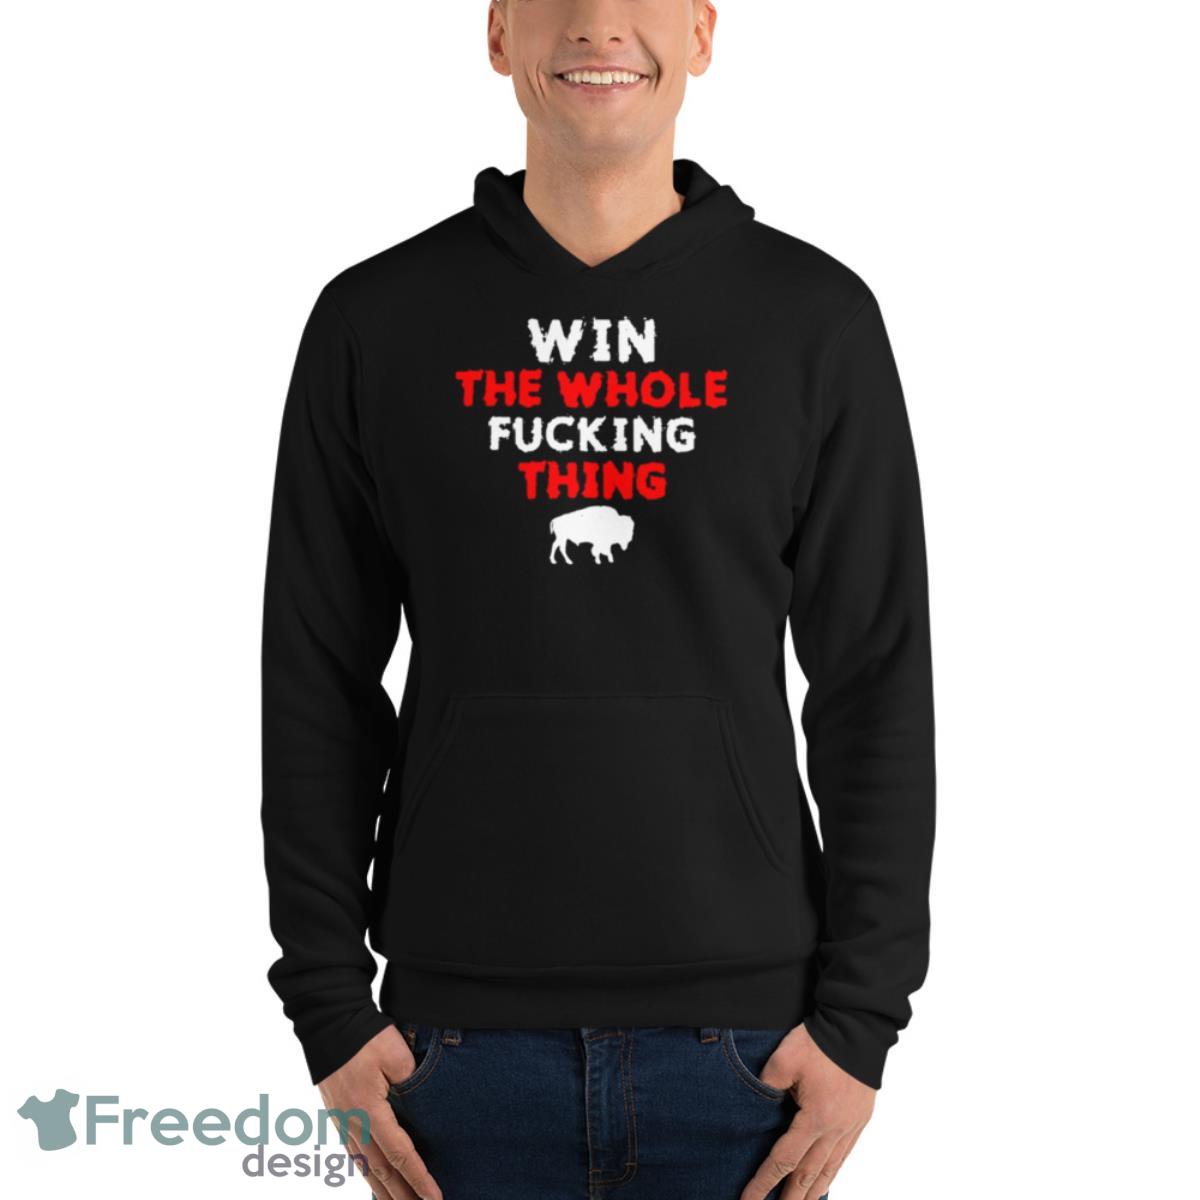 Buffalo Bills damar hamlin win the whole fucking thing shirt